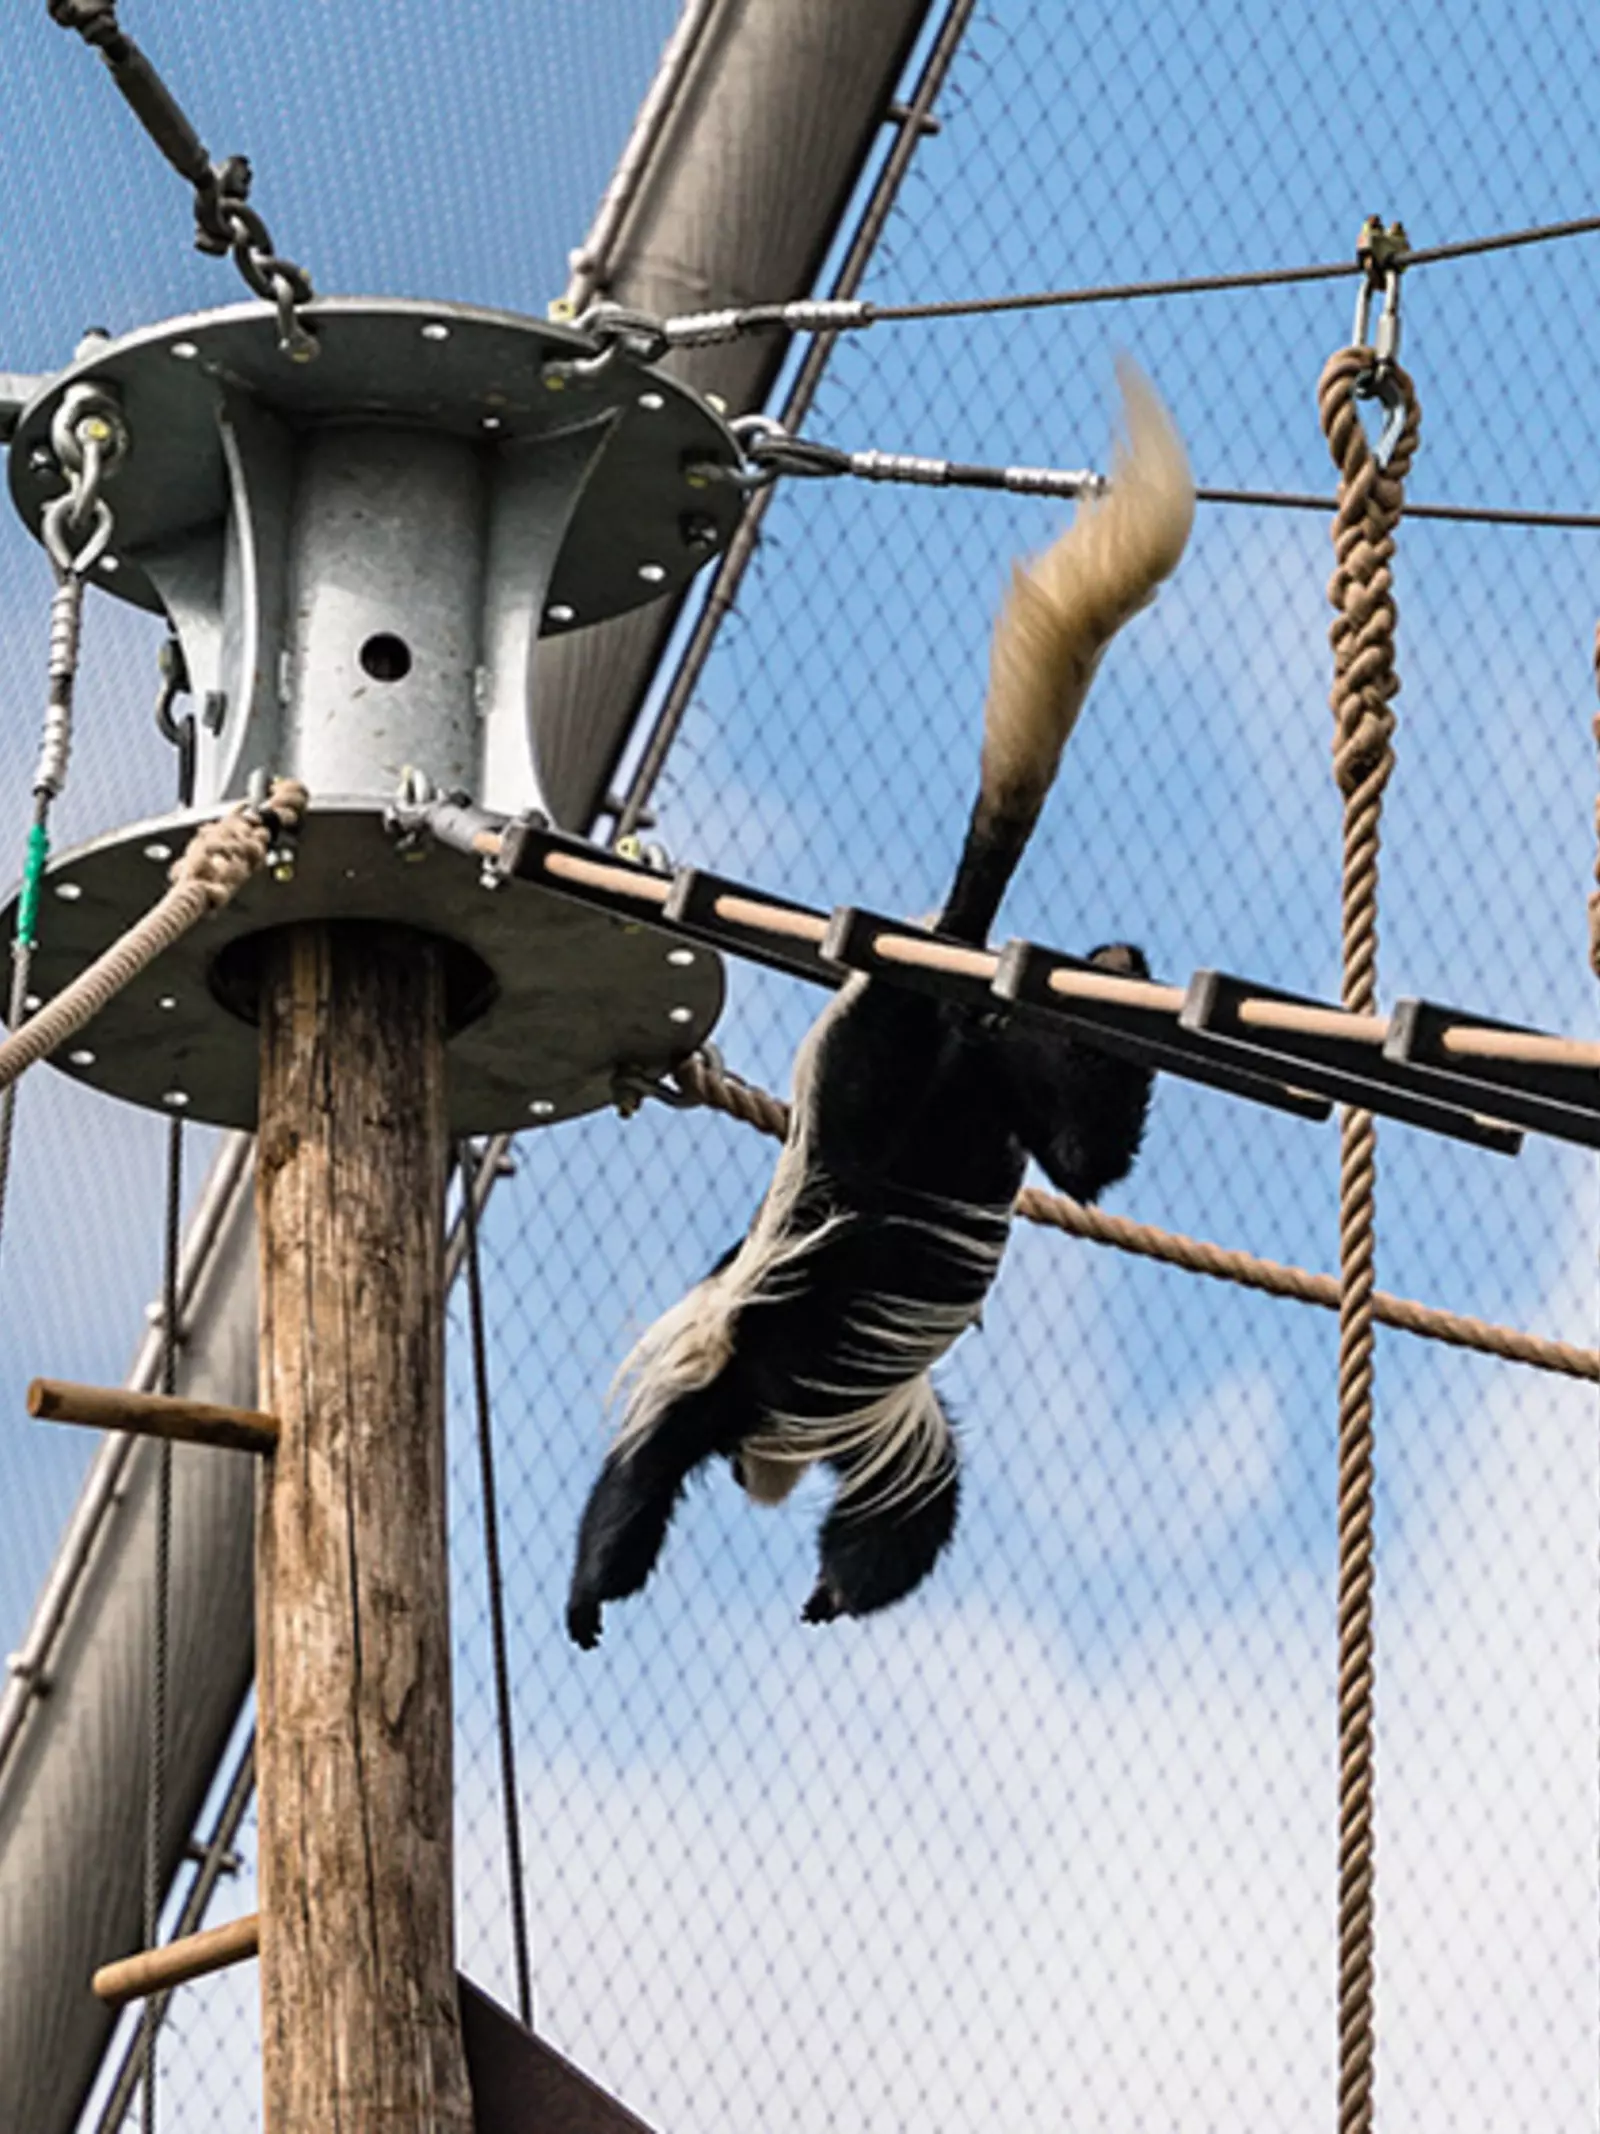 Monkey valley colobus monkey jumping at London Zoo